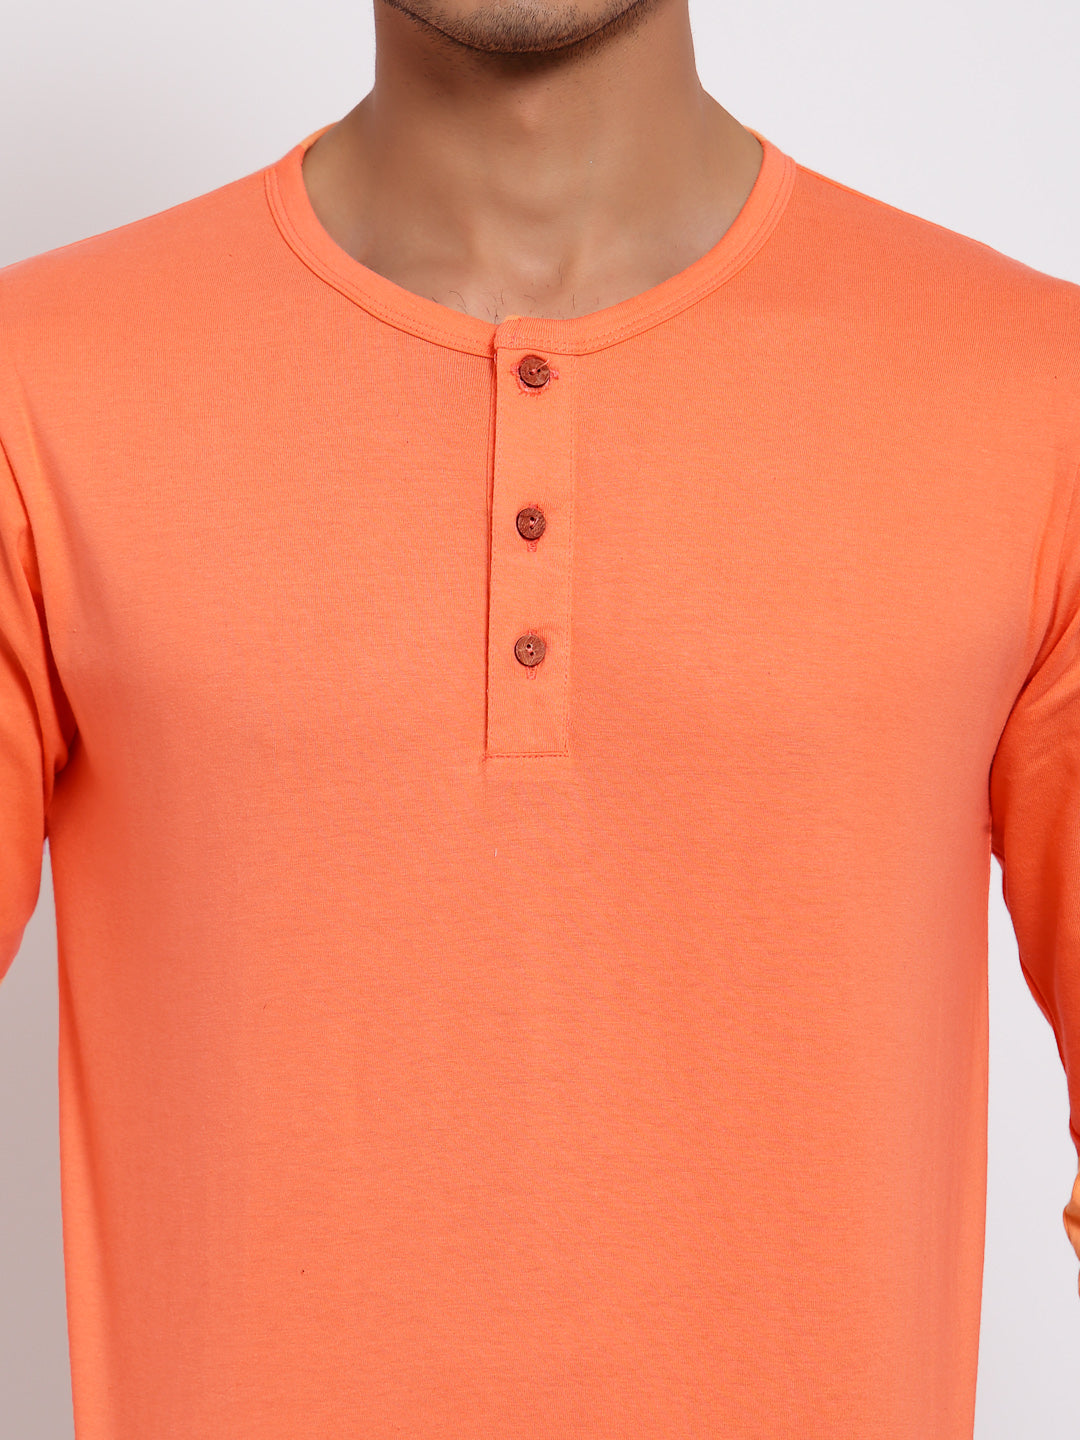 Plain Peach Henley Full Sleeves T-shirt